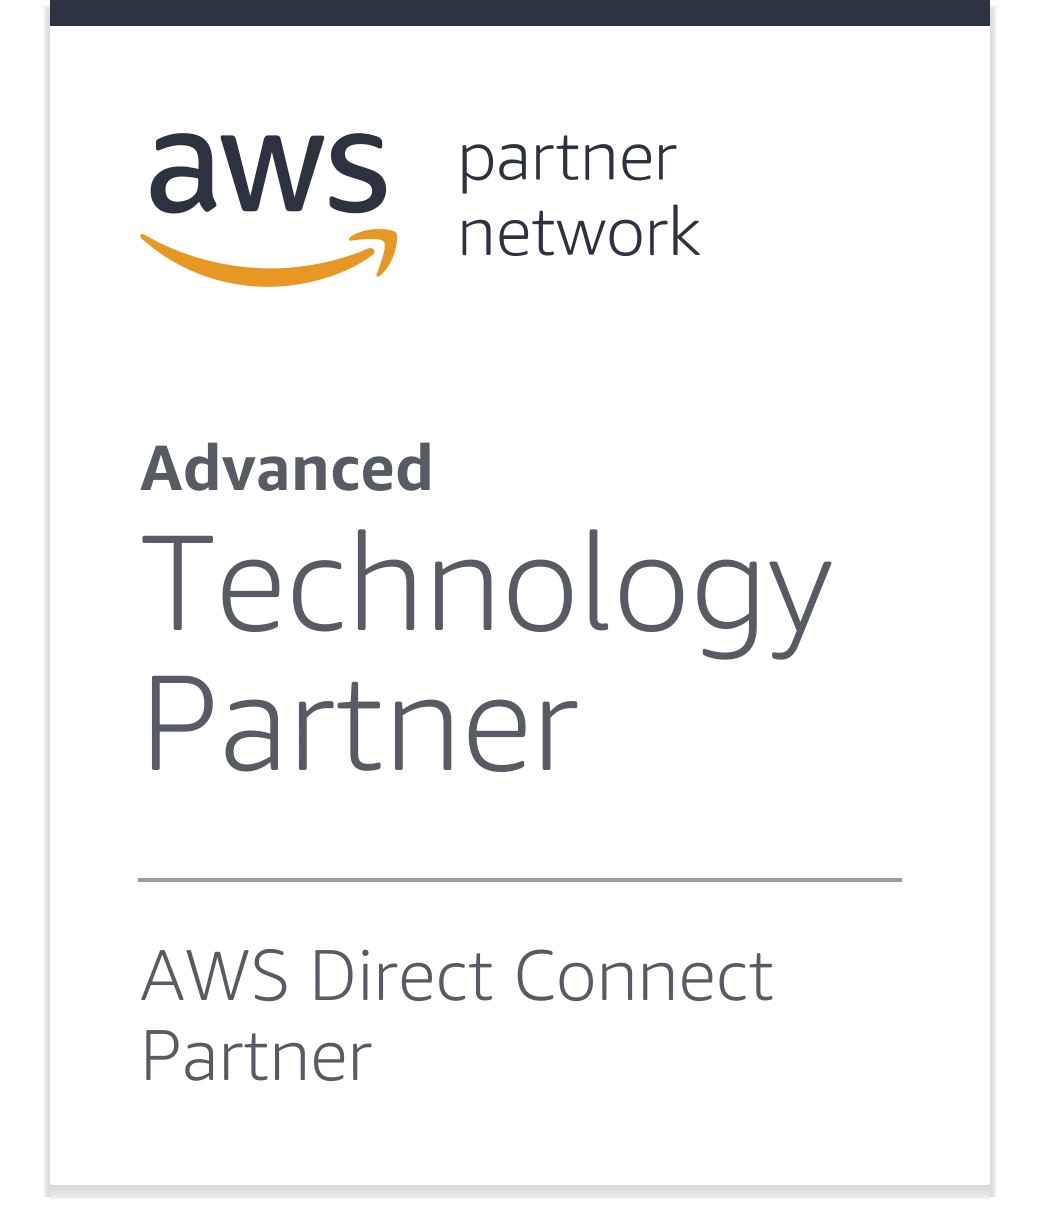 AWSDirectConnectPartner (1)